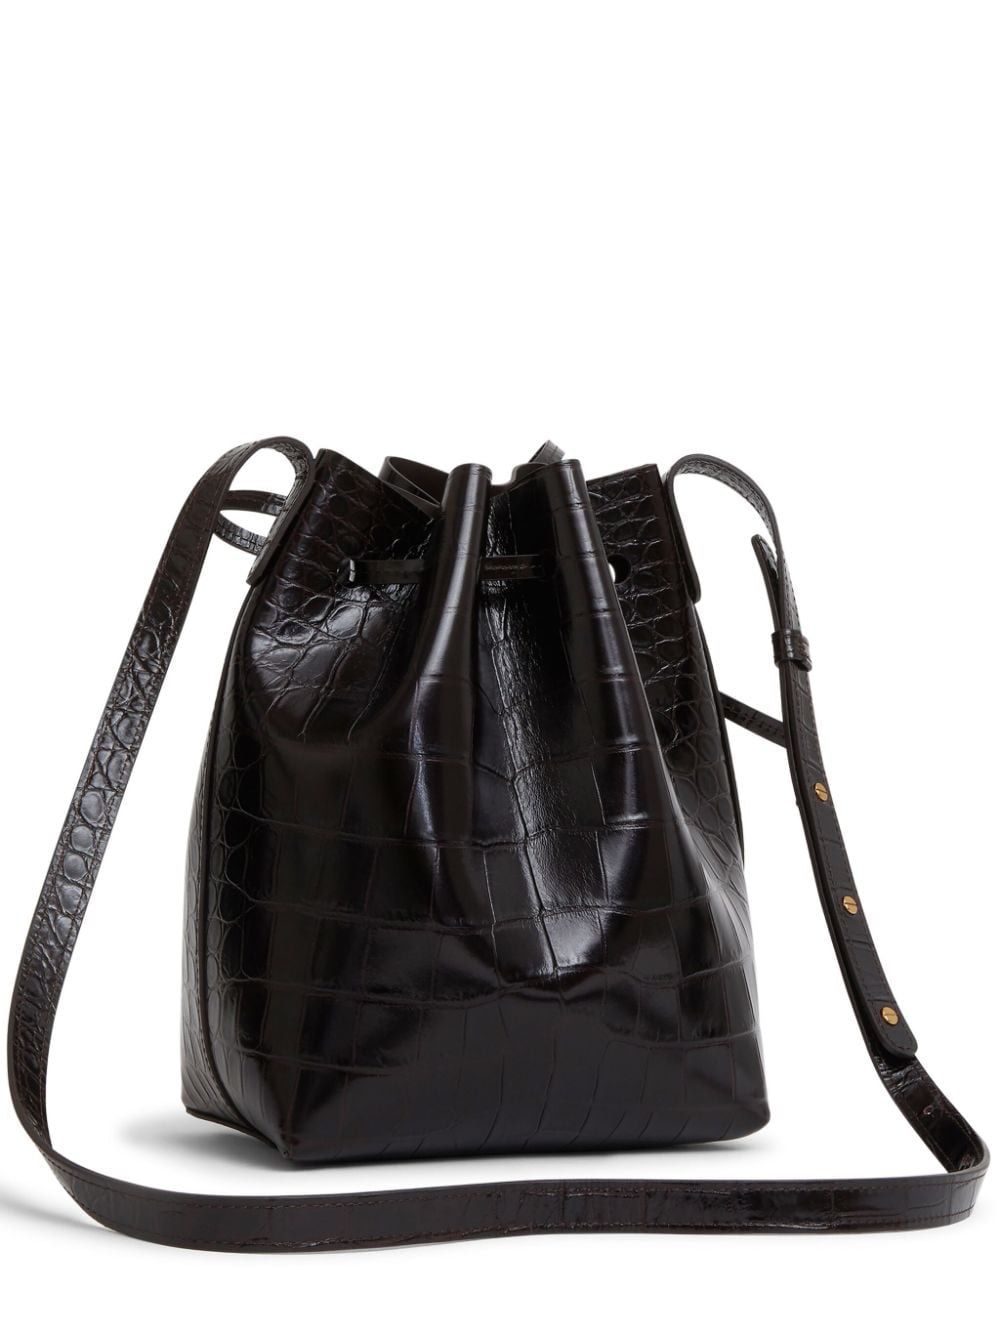 MANSUR GAVRIEL Women's Mini Bucket Crossbody Bag in Chocolate Brown, Stamped Leather